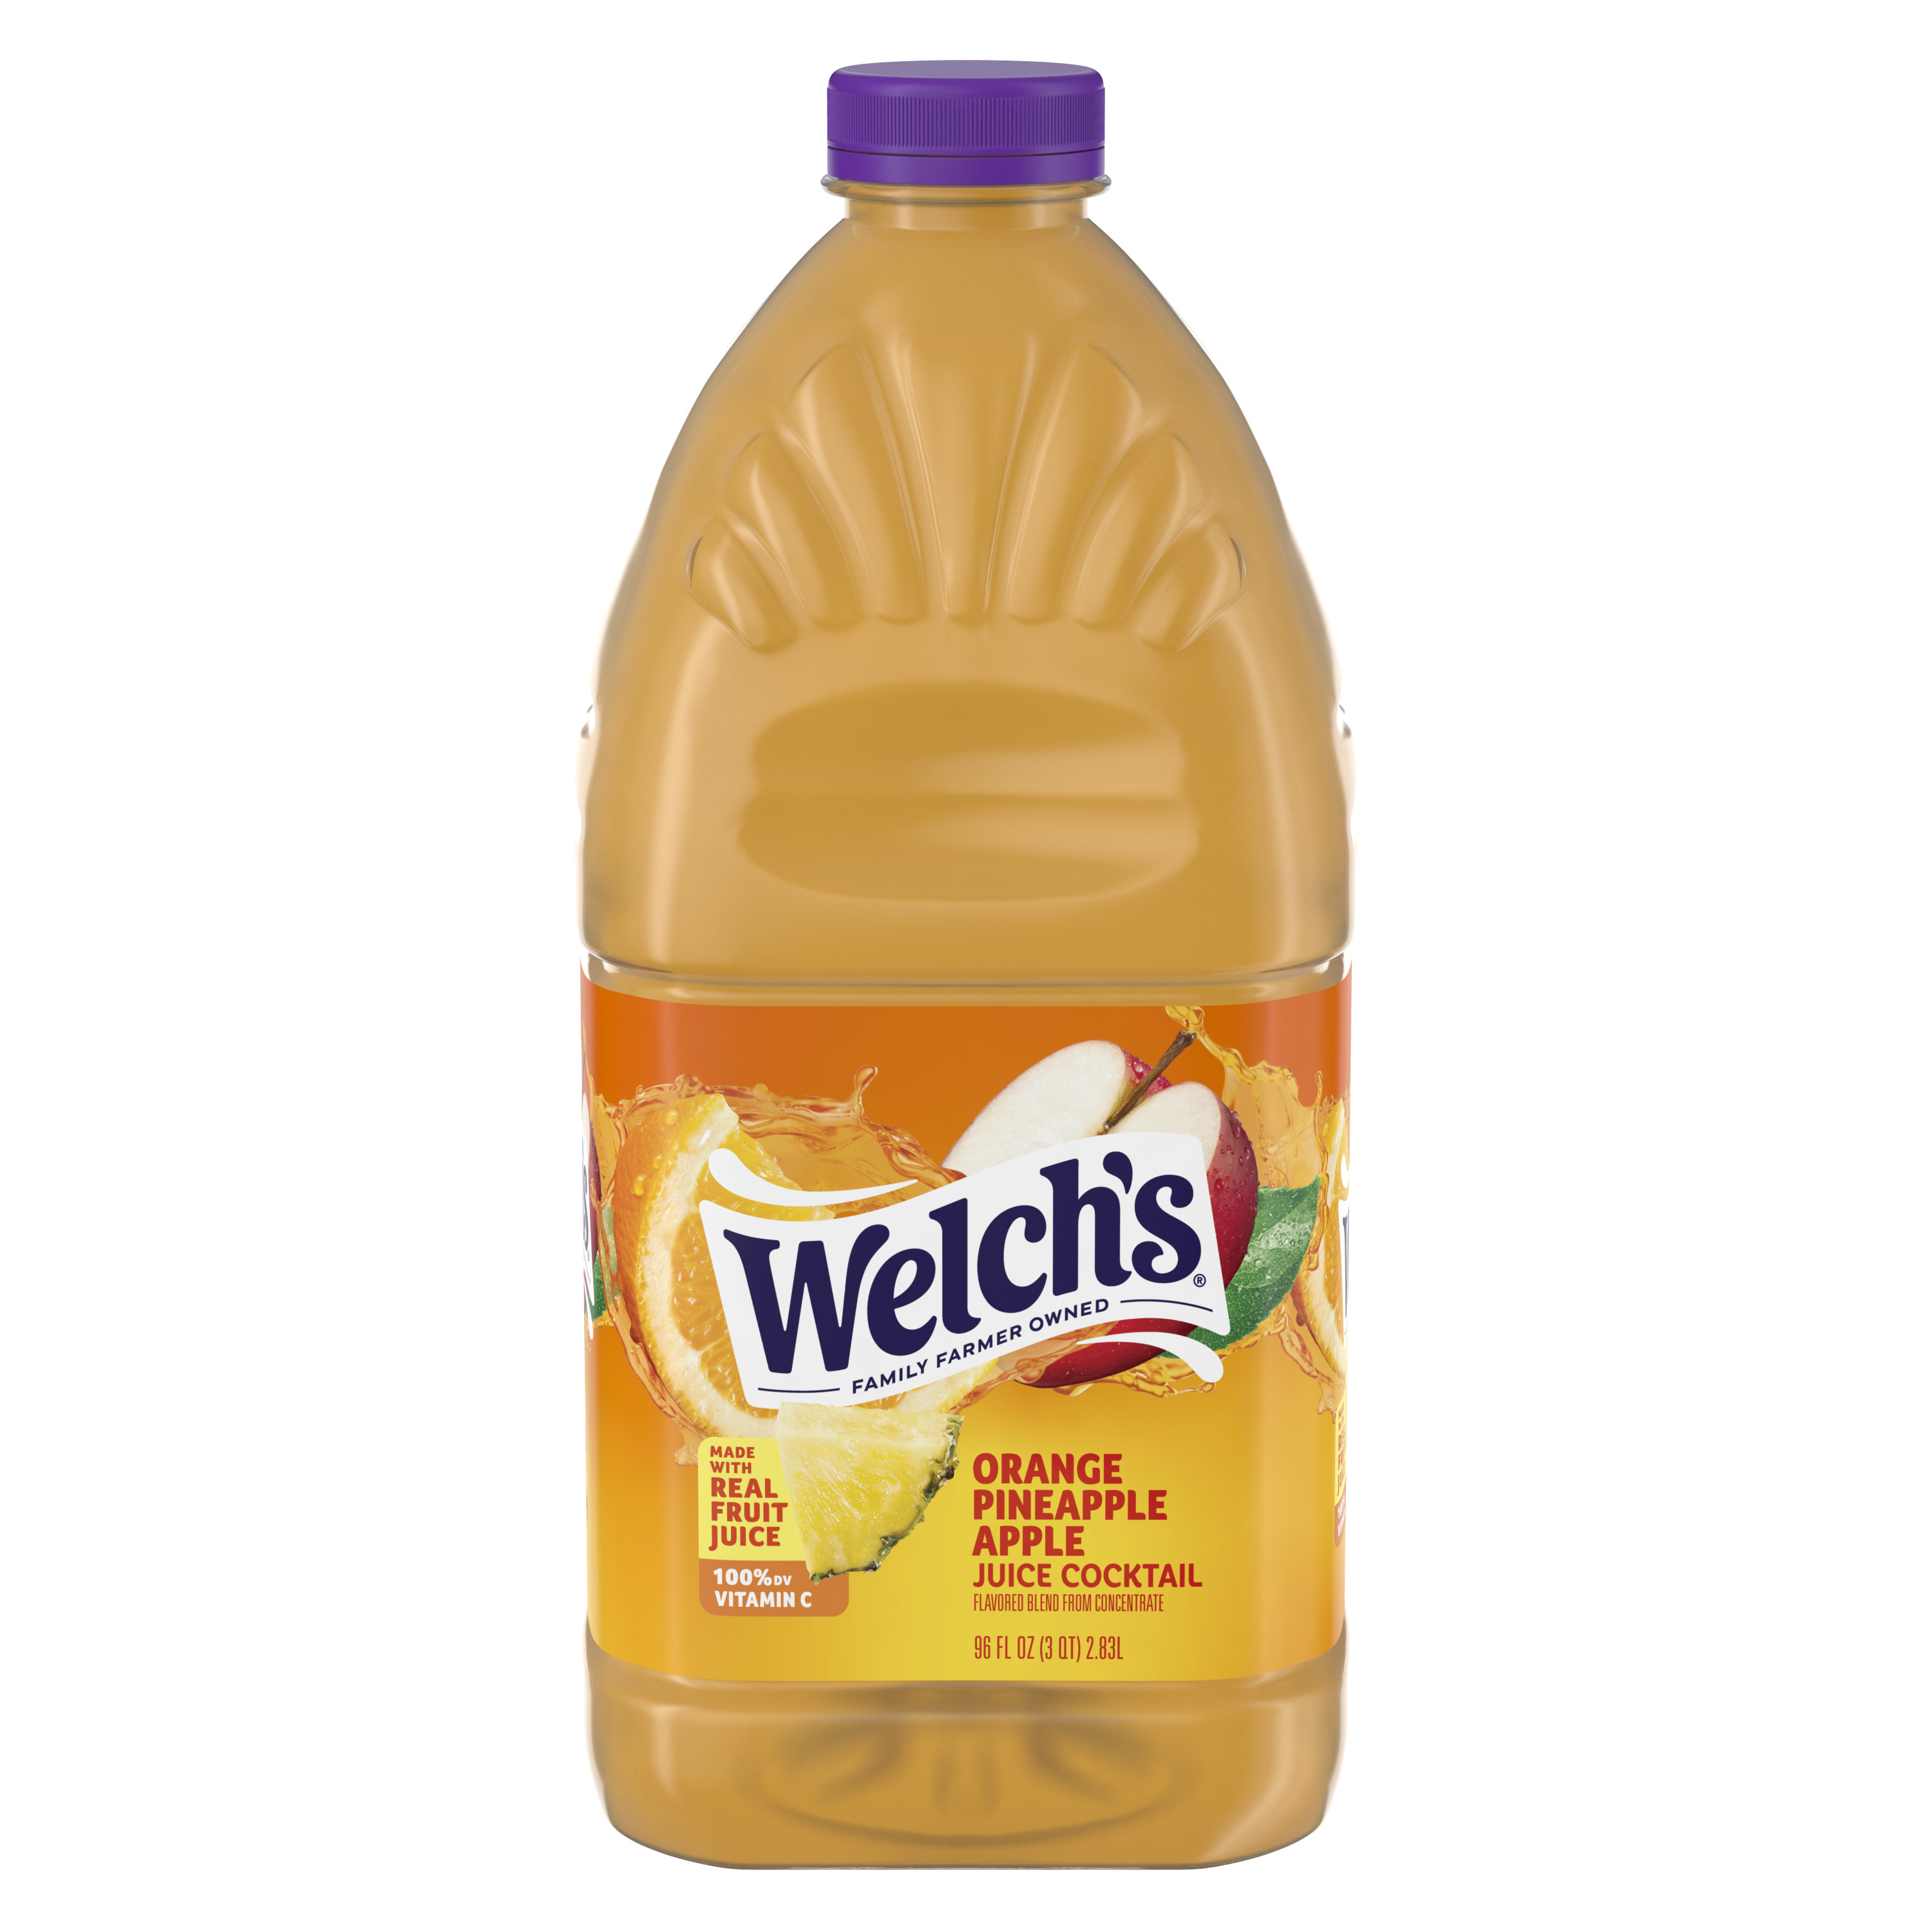 Welch's Orange Pineapple Apple Juice Cocktail, 96 fl oz Bottle - image 1 of 8